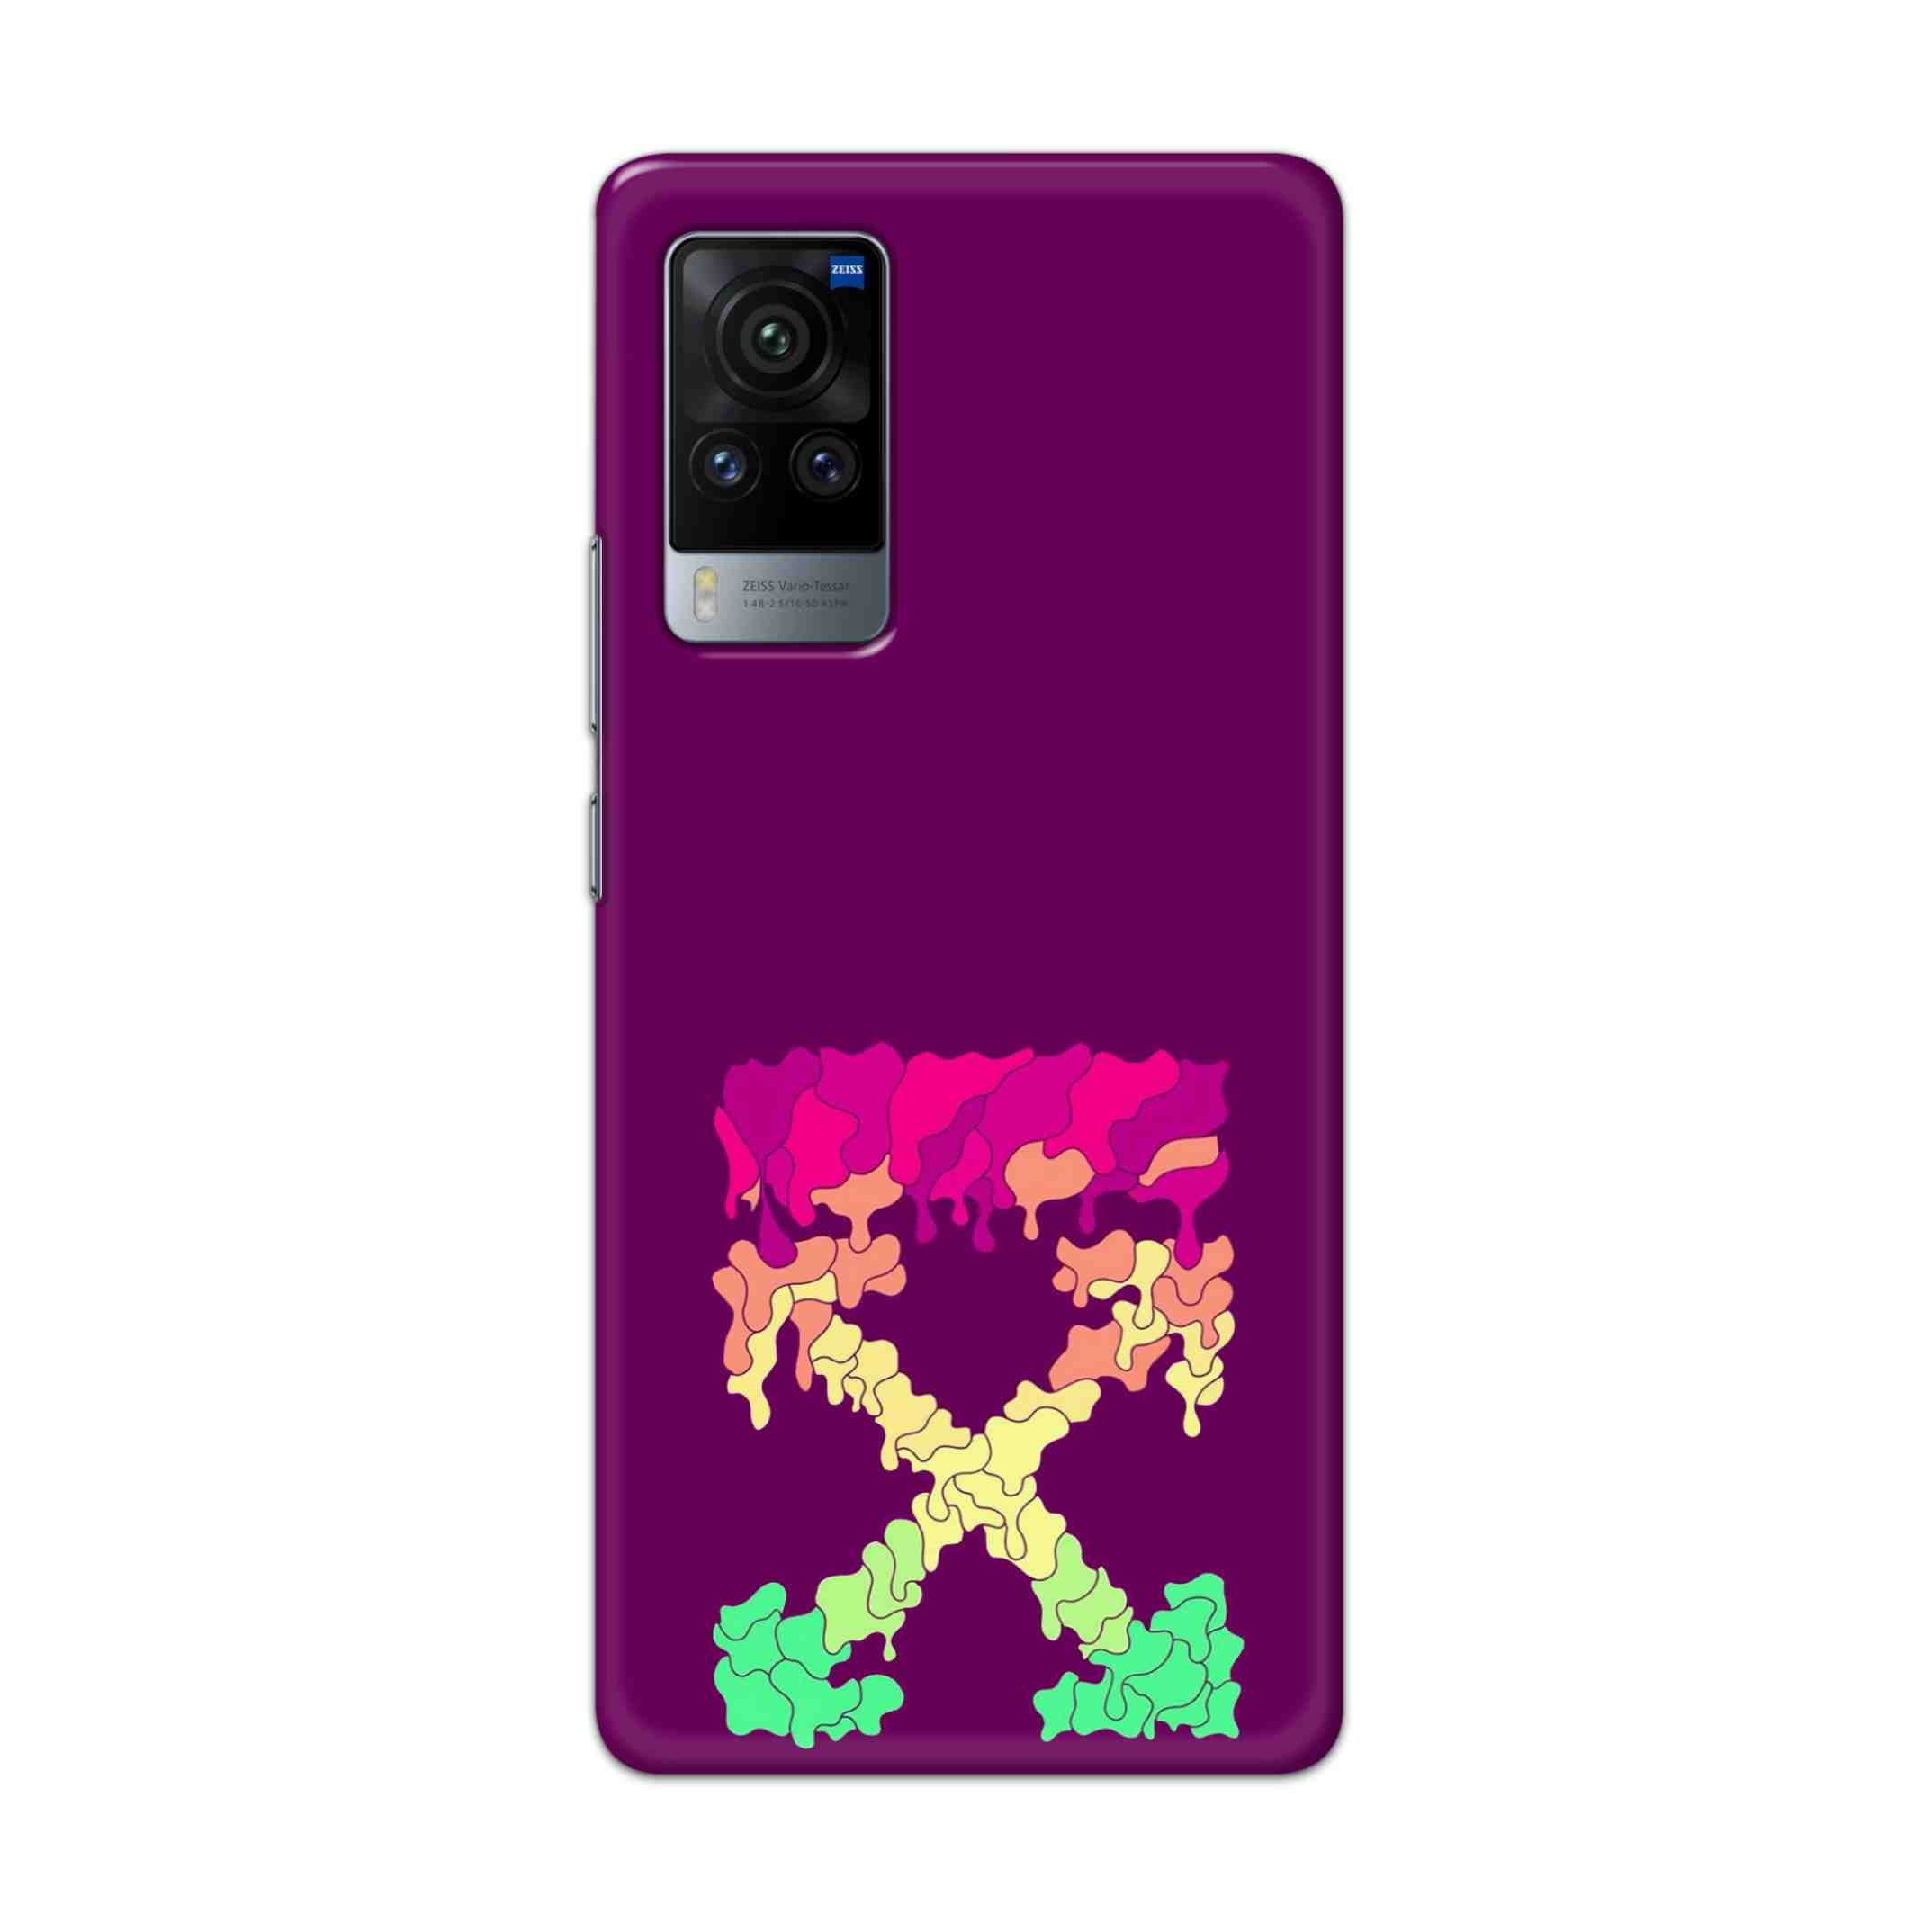 Buy X.O Hard Back Mobile Phone Case Cover For Vivo X60 Pro Online